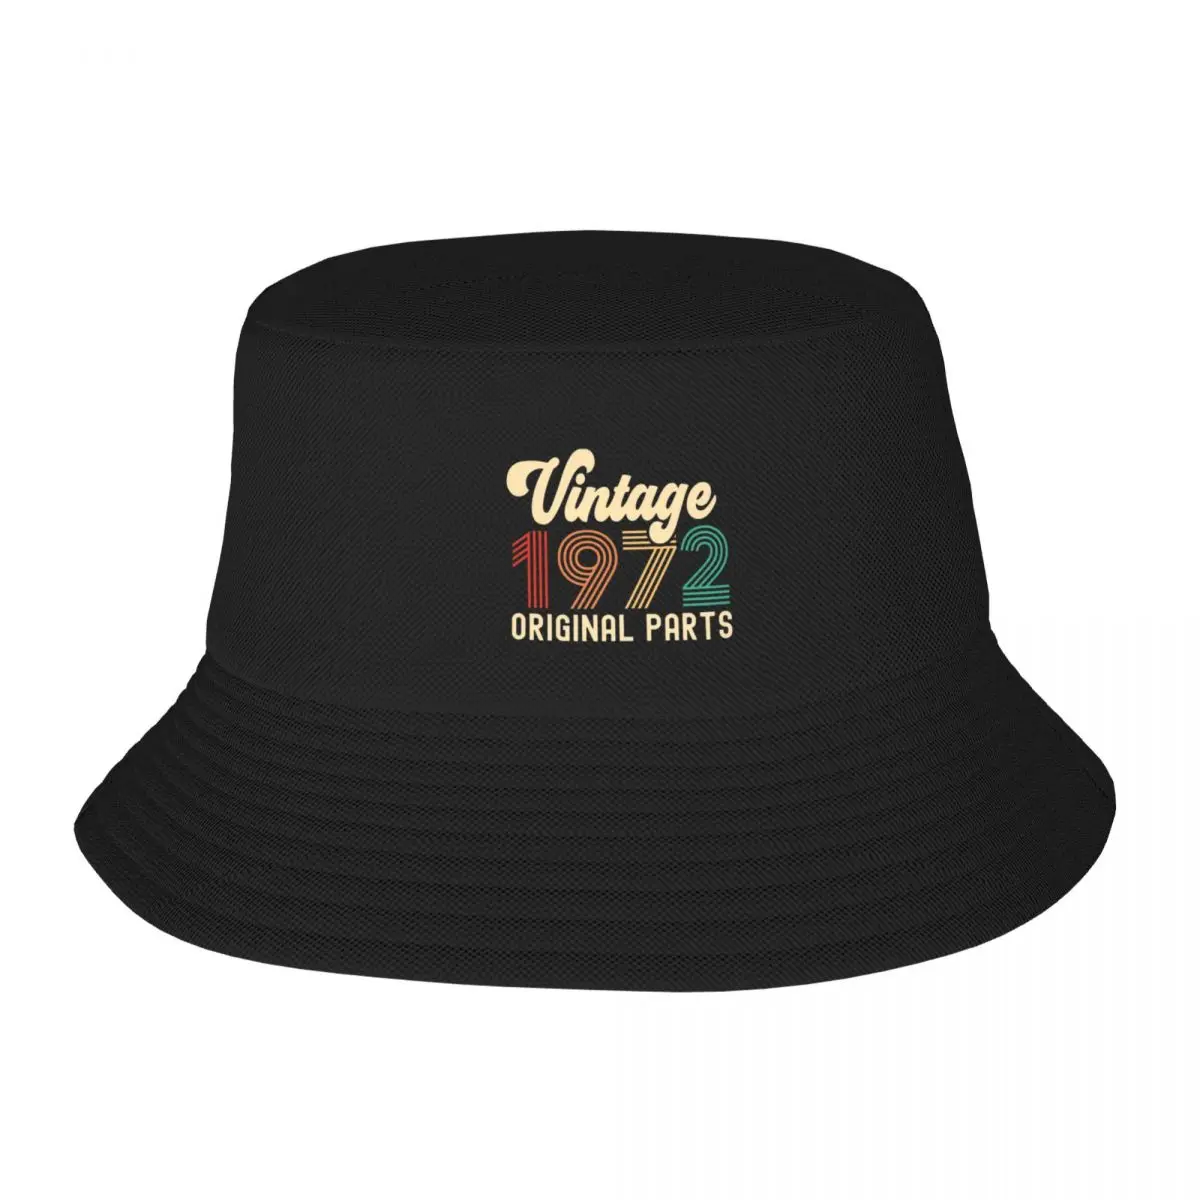 

Vintage 1972 Original Parts Men Women Bucket Hat Outdoor Sun Protection Cap Breathable Mesh Fisherman Hats For Birthday Gift